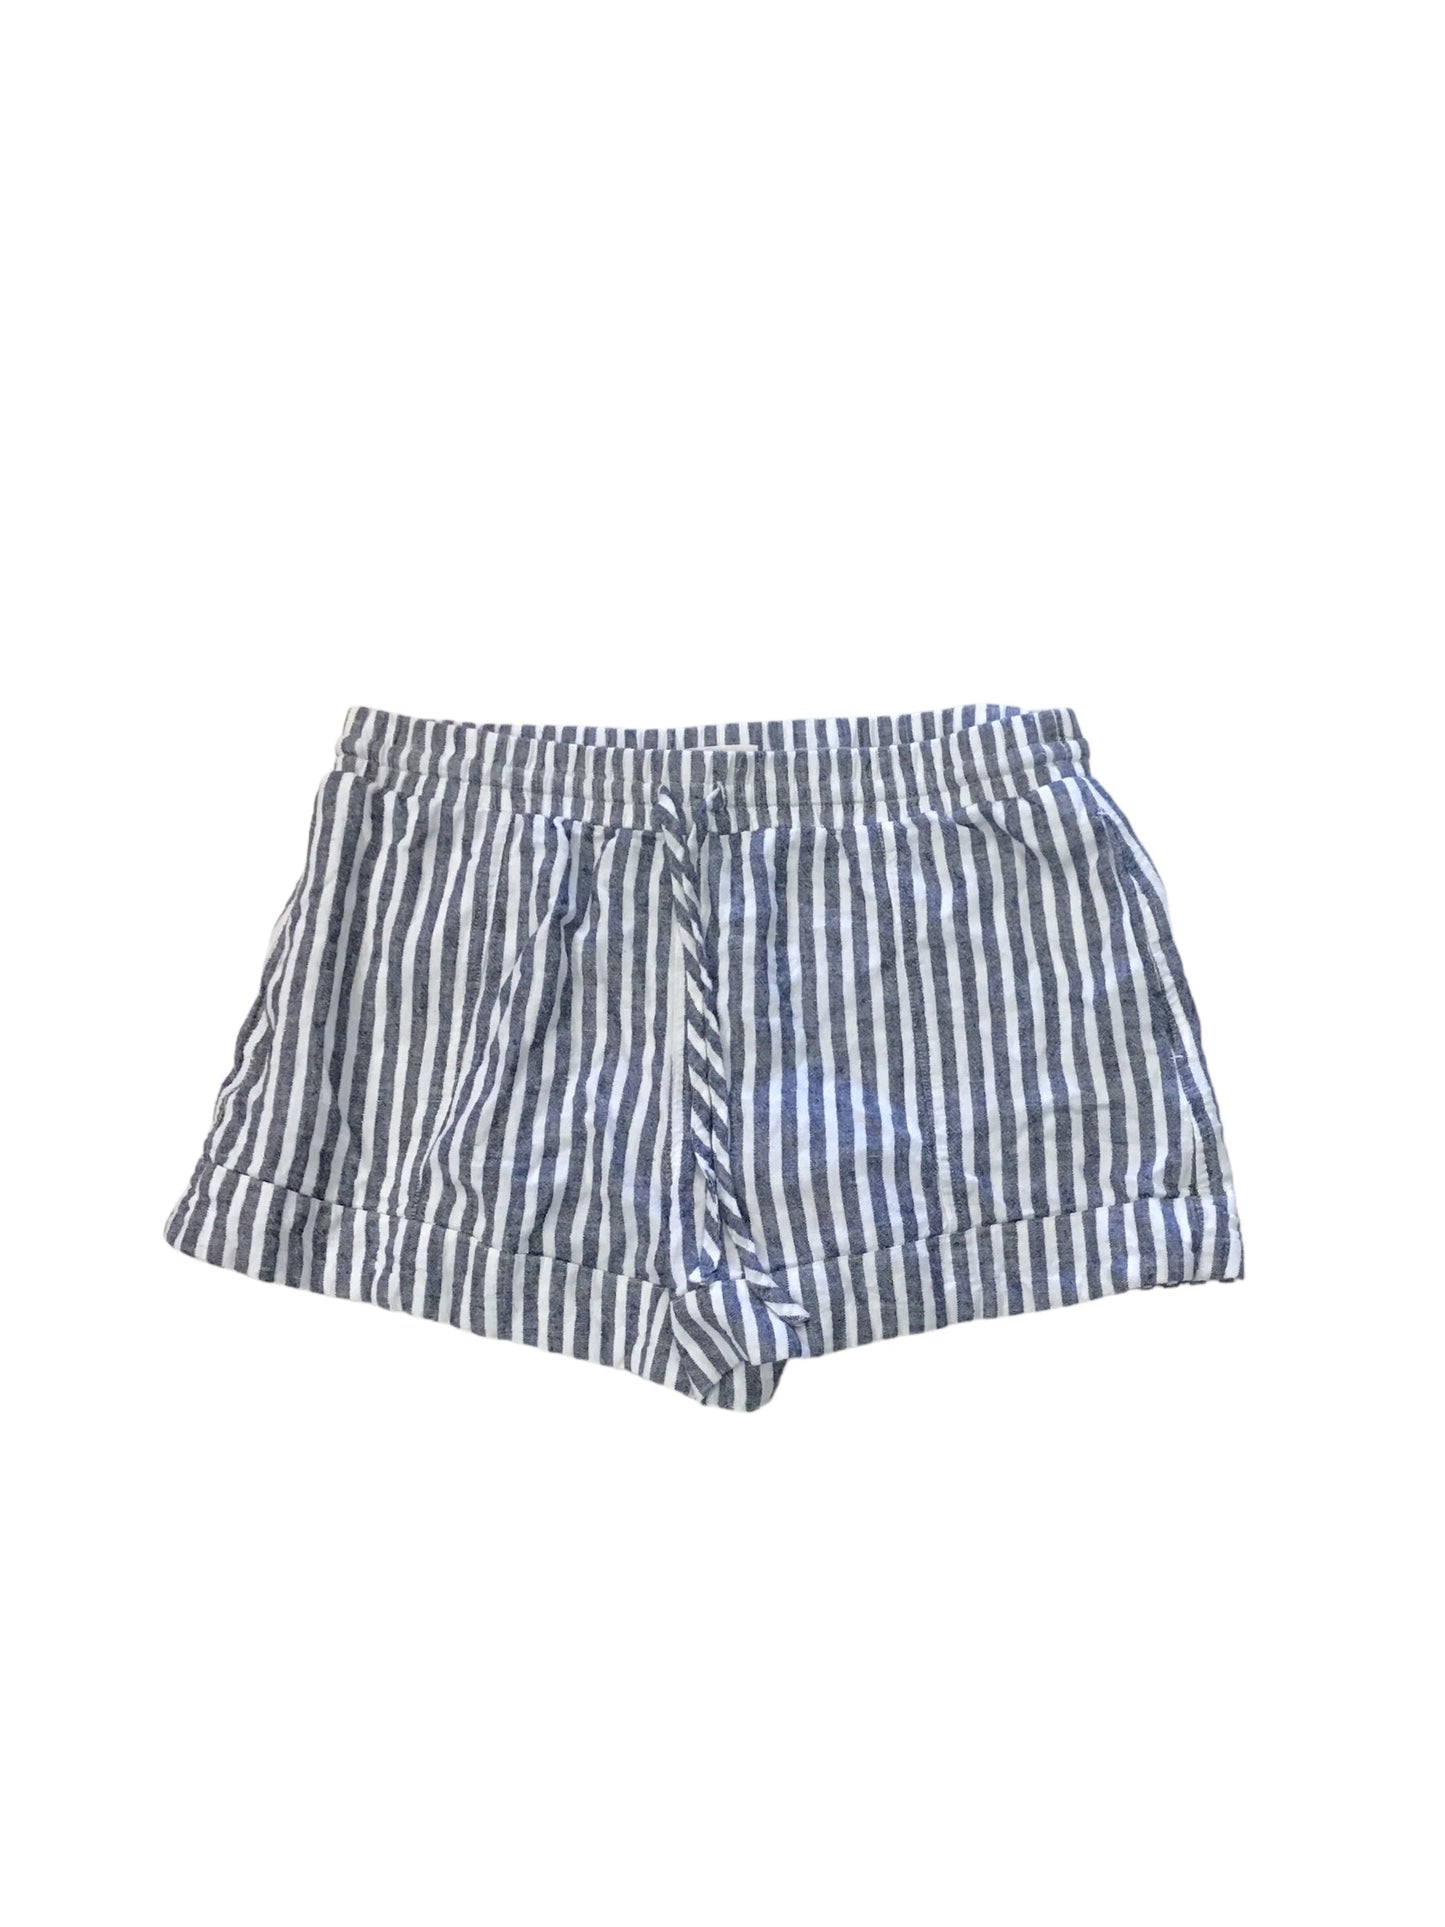 Striped Pattern Shorts Universal Thread, Size M